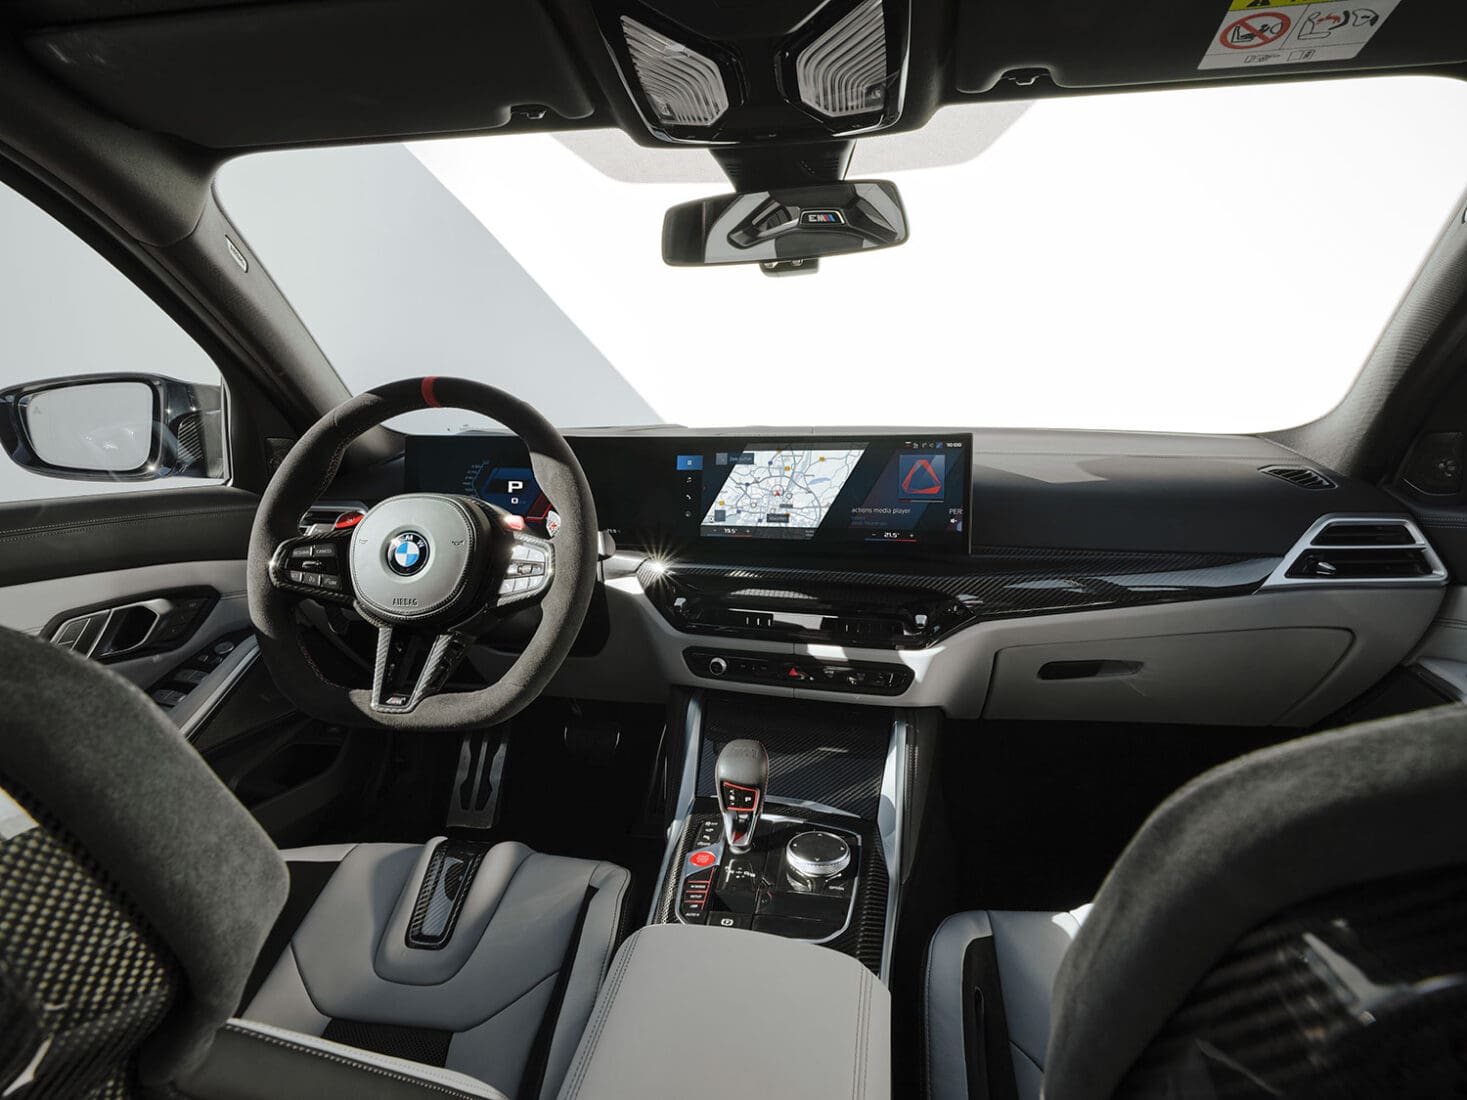 BMW M3 interior